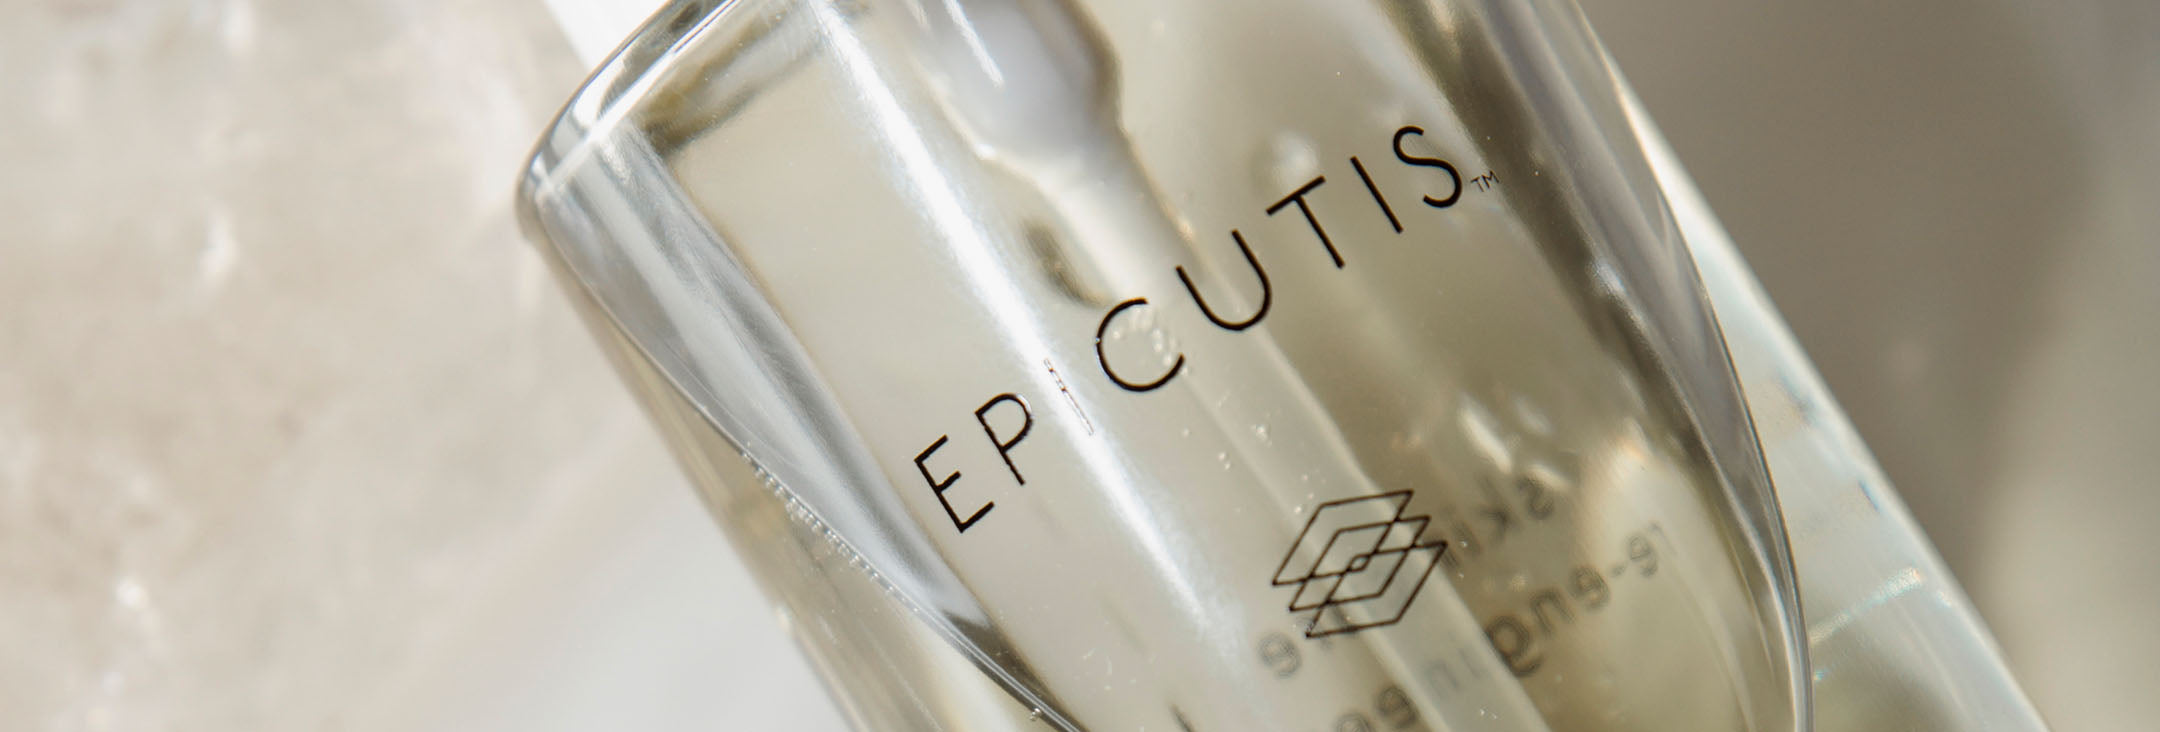 close up of epicutis oil cleanser